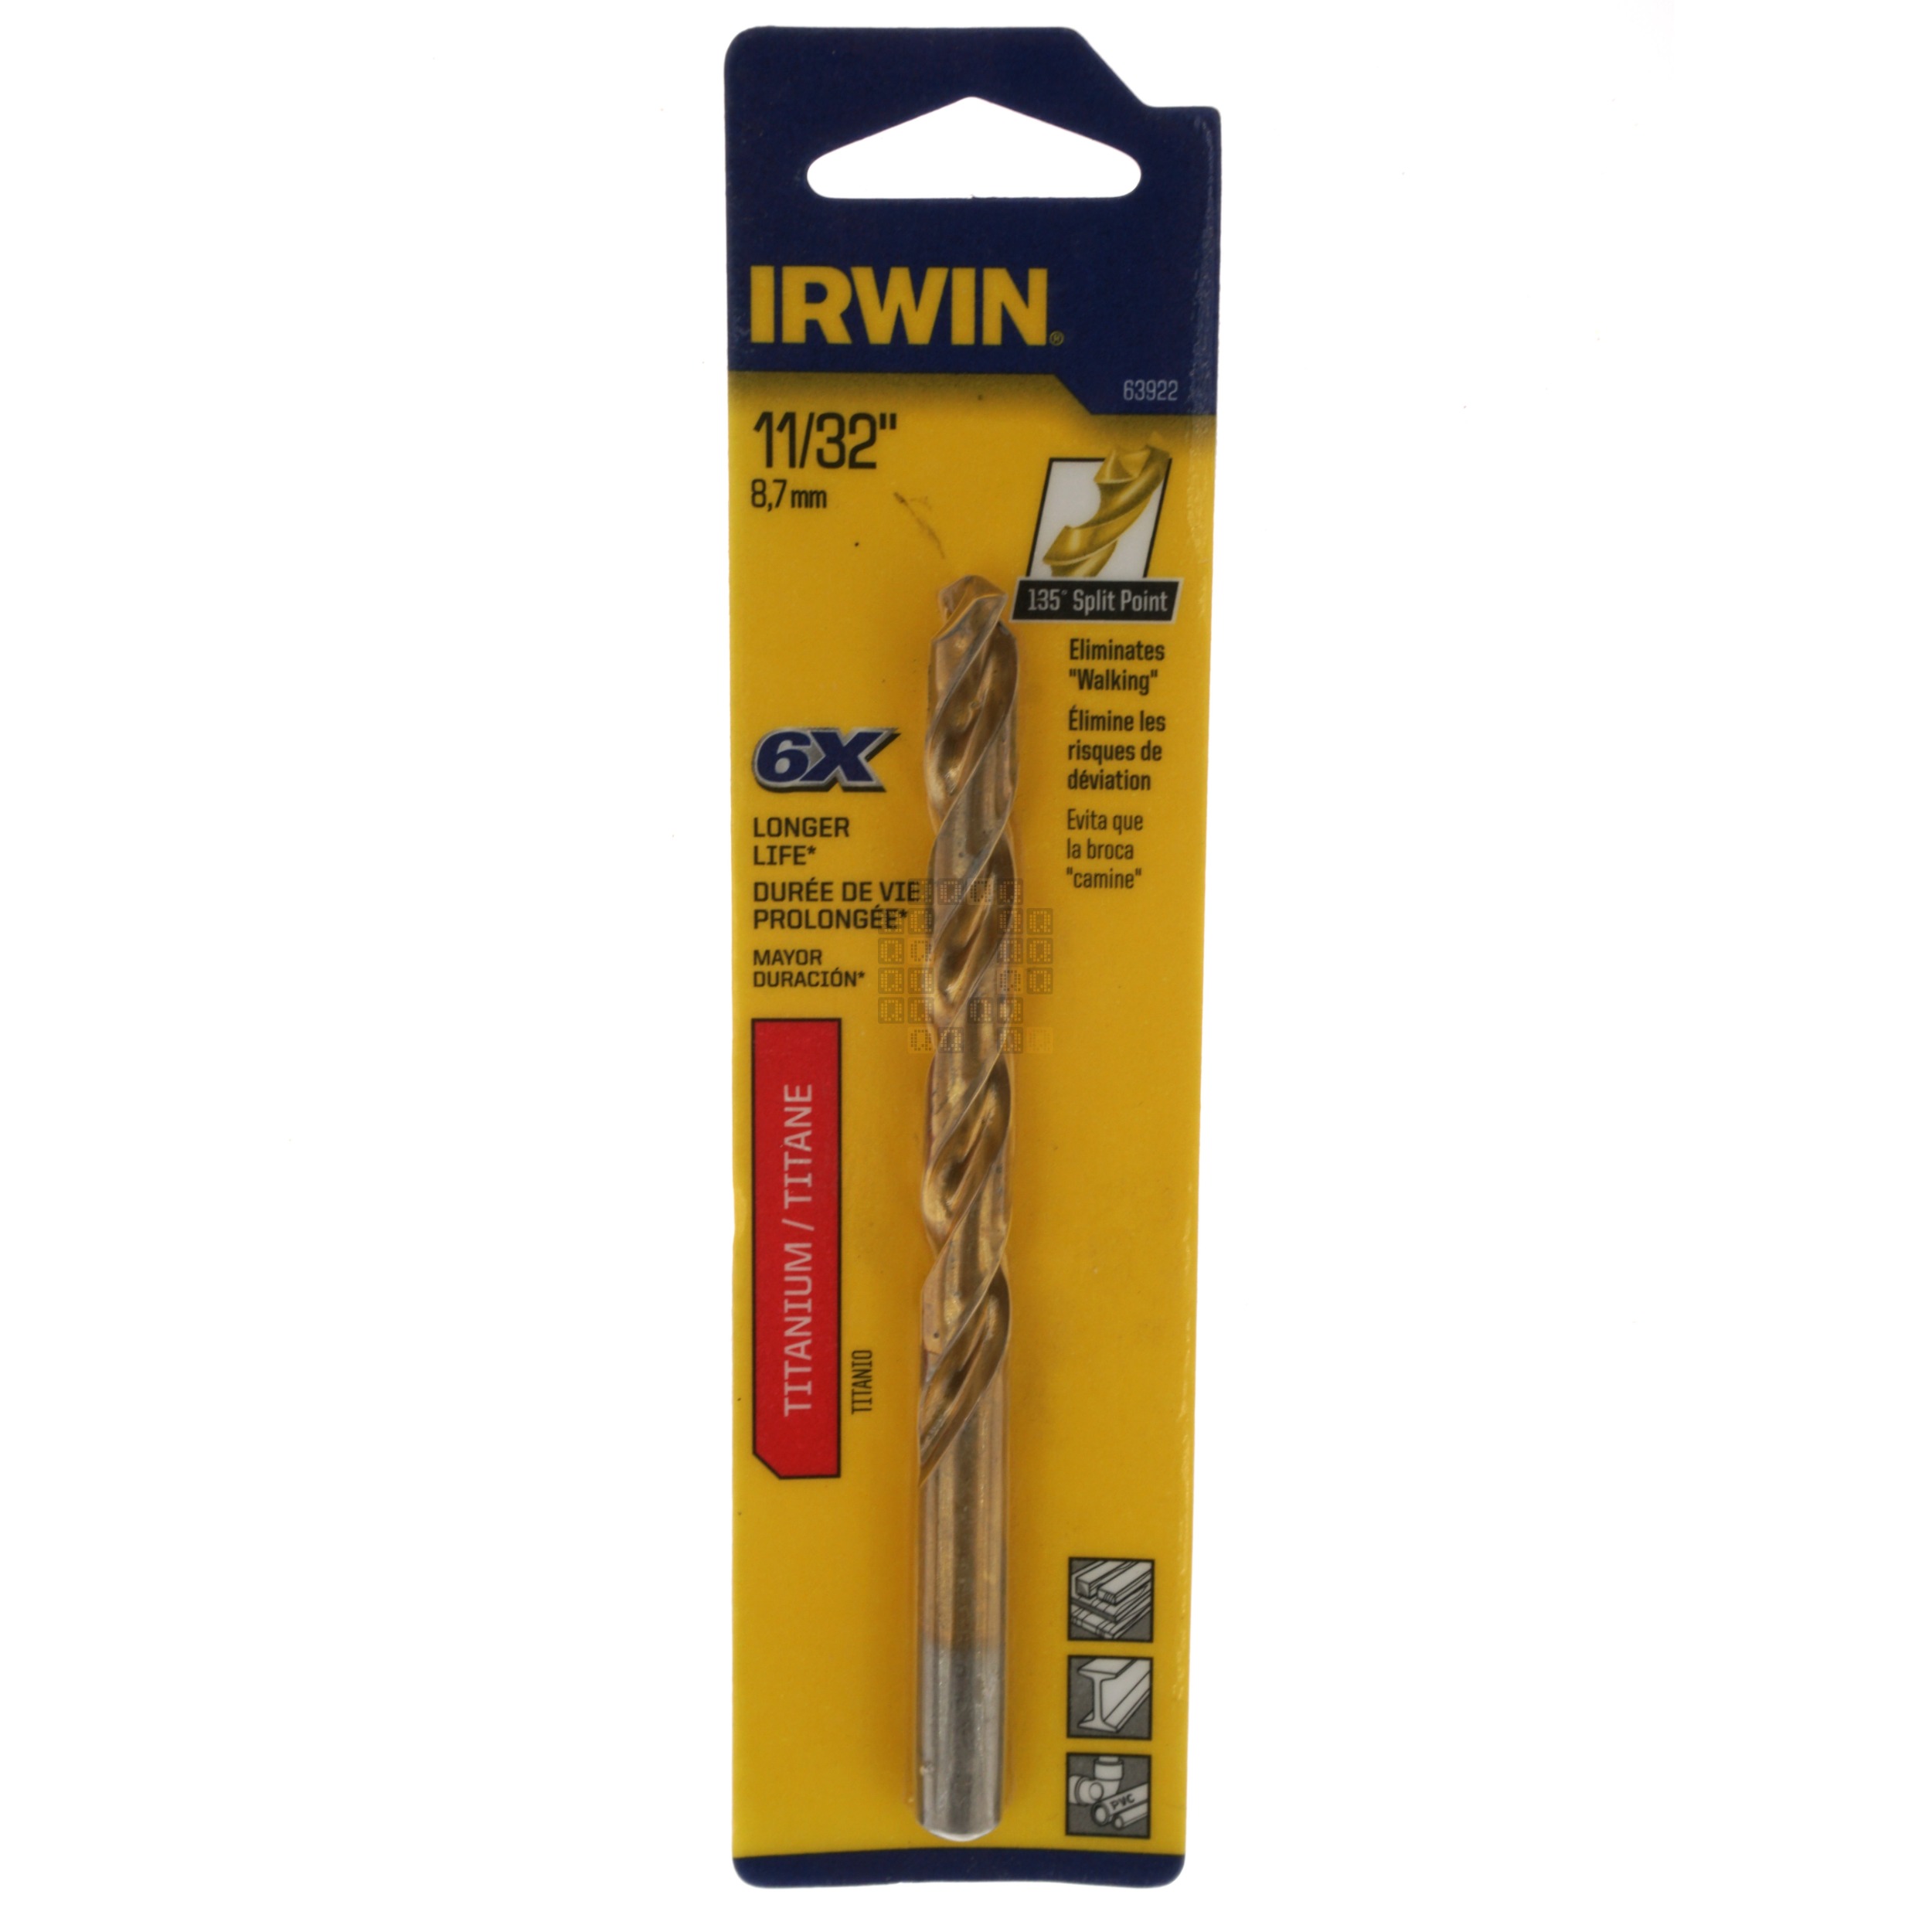 Irwin 63922 11/32" Titanium Coated 135° Split Point Drill Bit